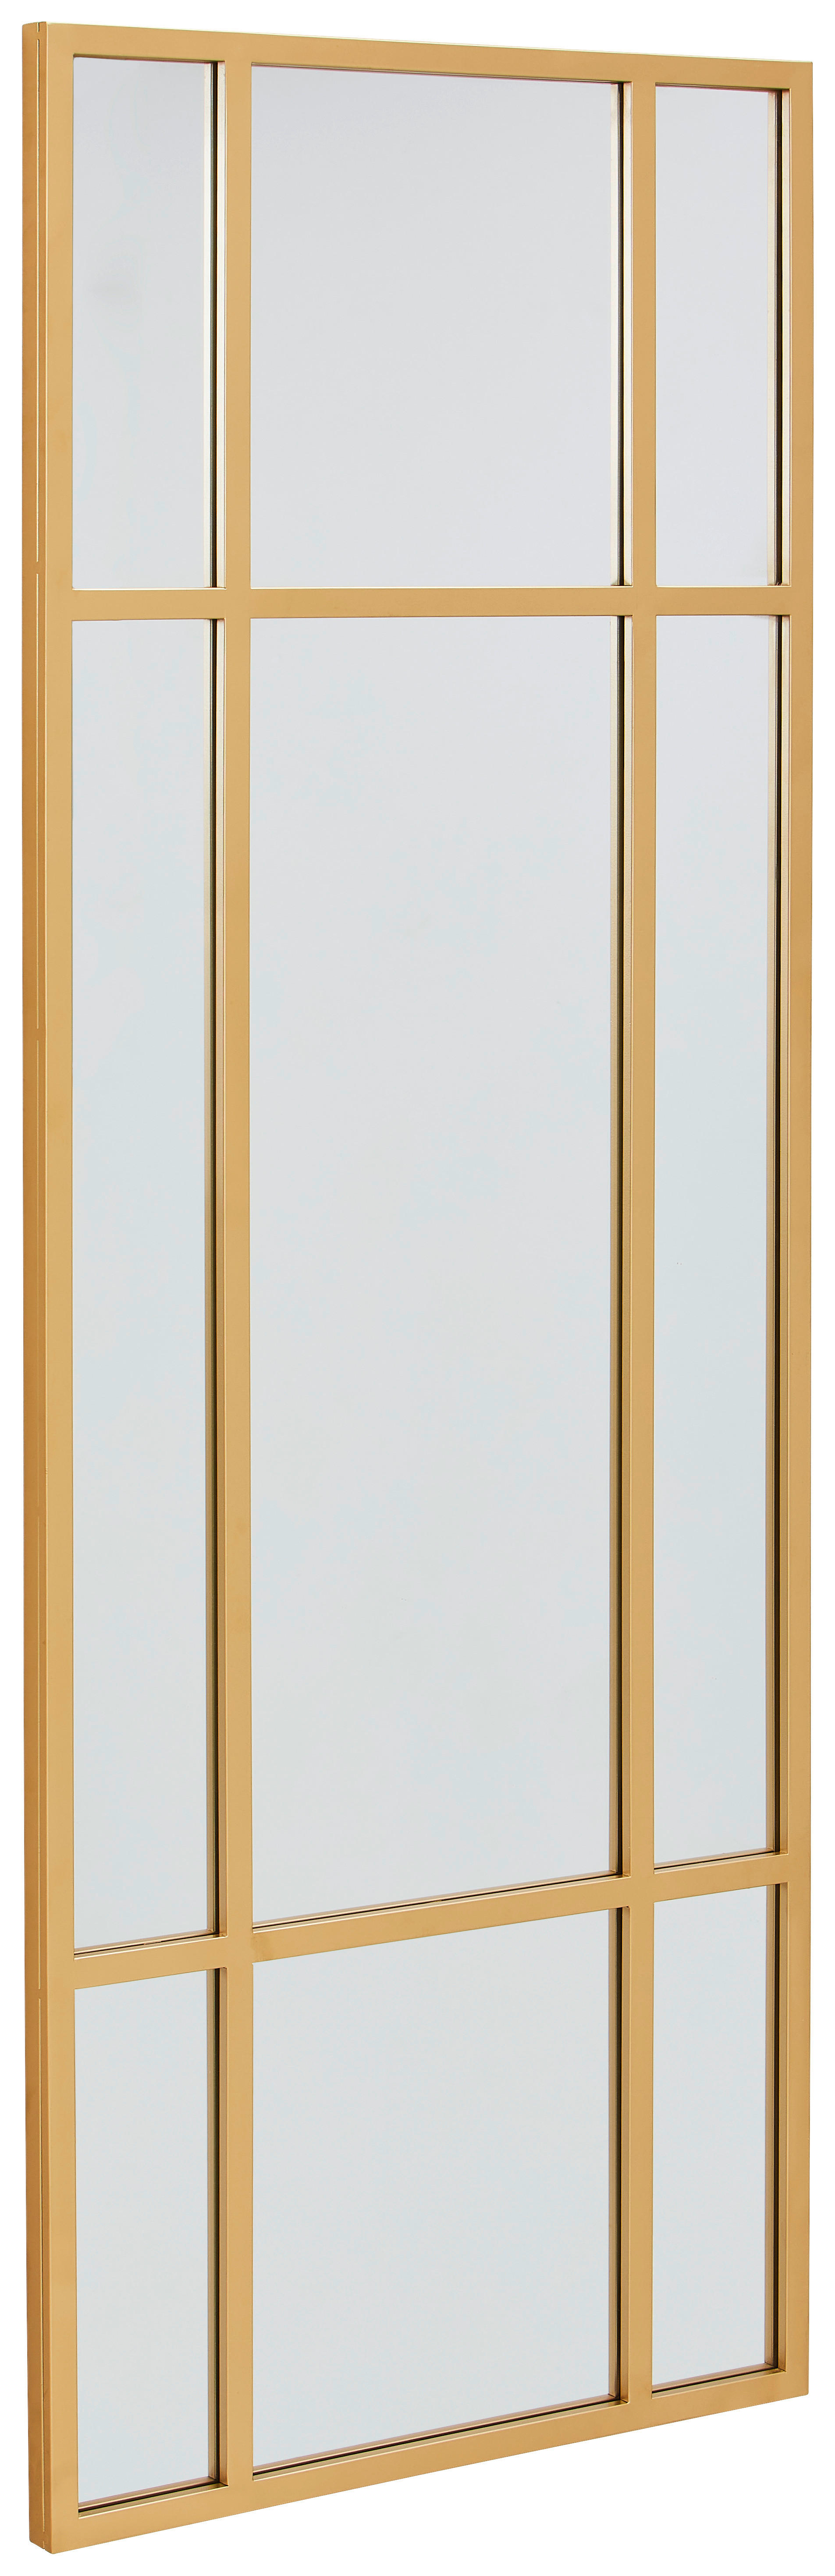 WANDSPIEGEL 60/160/3 cm    - Goldfarben, Design, Glas/Metall (60/160/3cm) - MID.YOU